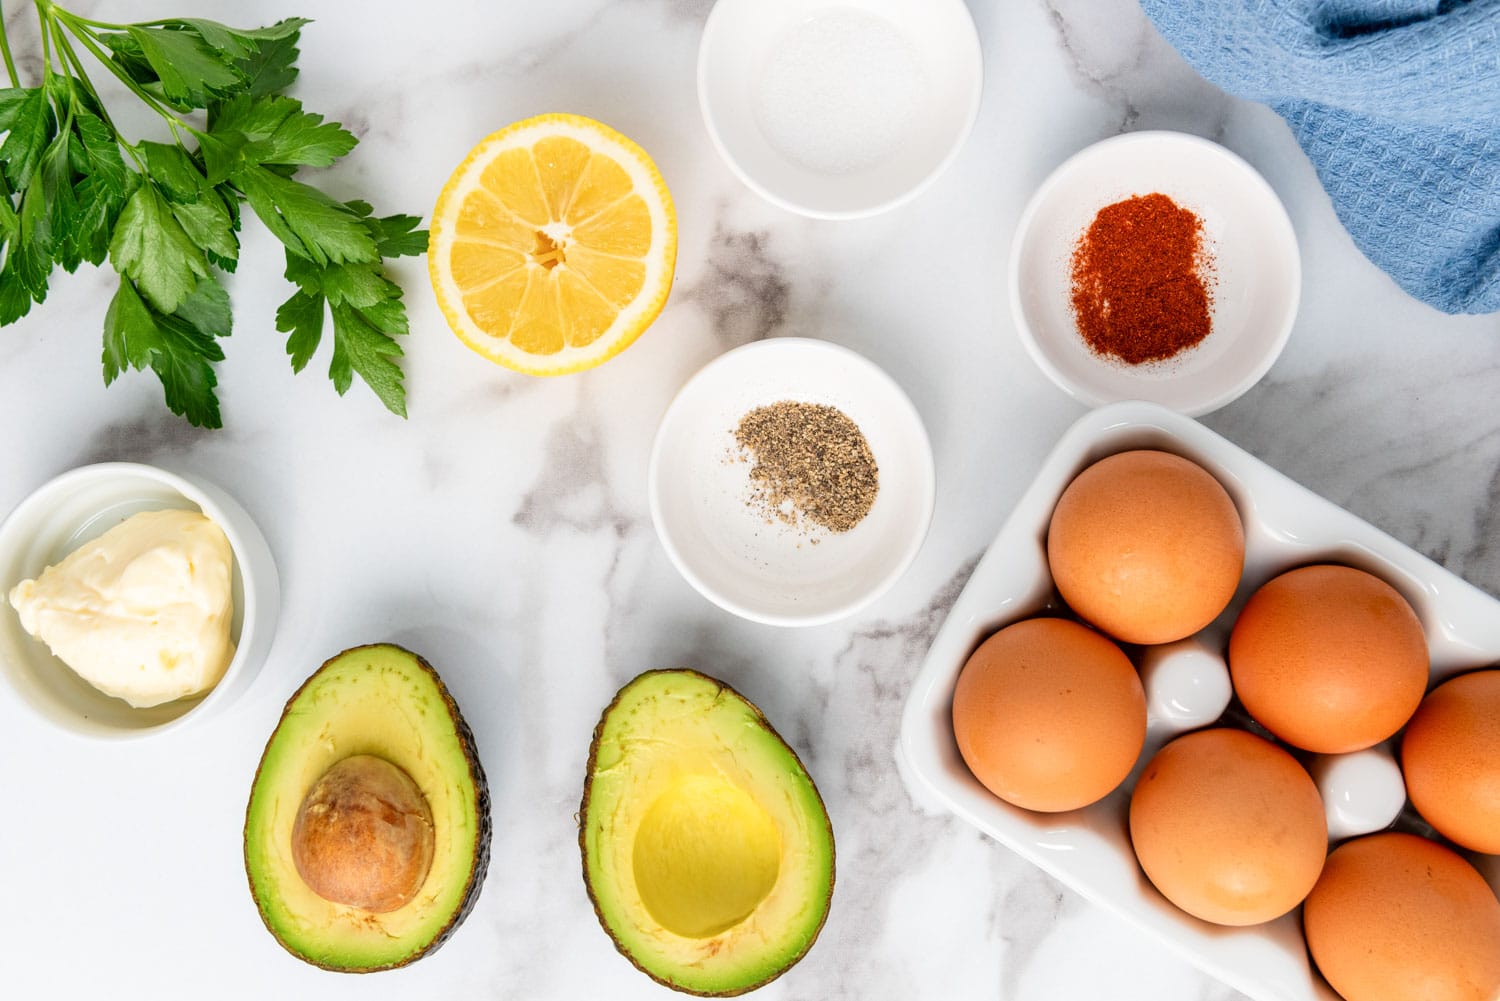 Ingredients needed to make avocado deviled eggs